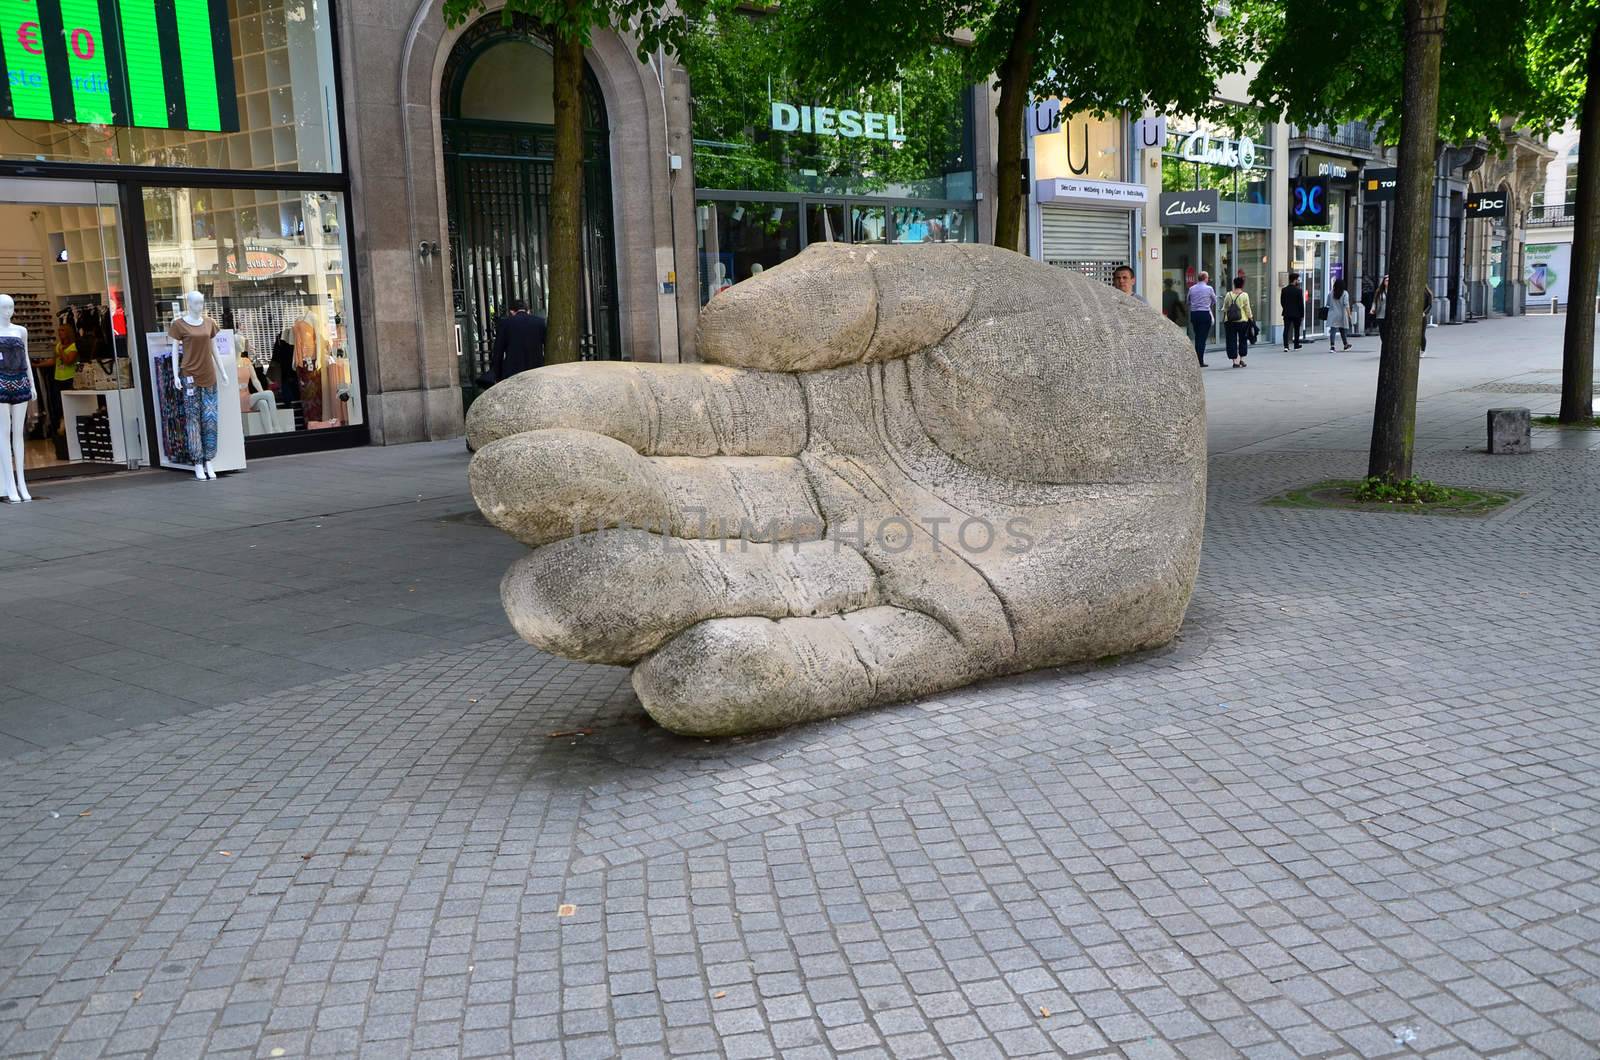 Antwerp, Belgium - May 10, 2015: Giant Hand statue on Meir street, The main shopping street in Antwerp, Belgium